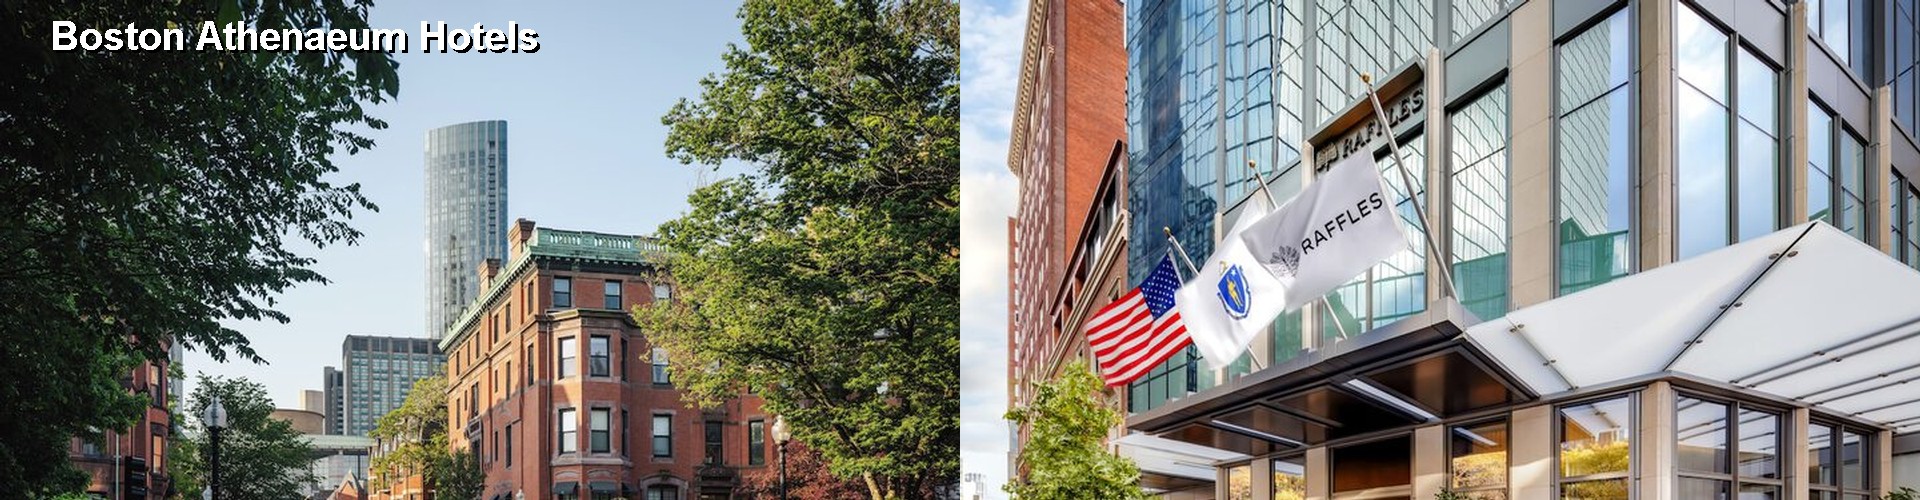 5 Best Hotels near Boston Athenaeum